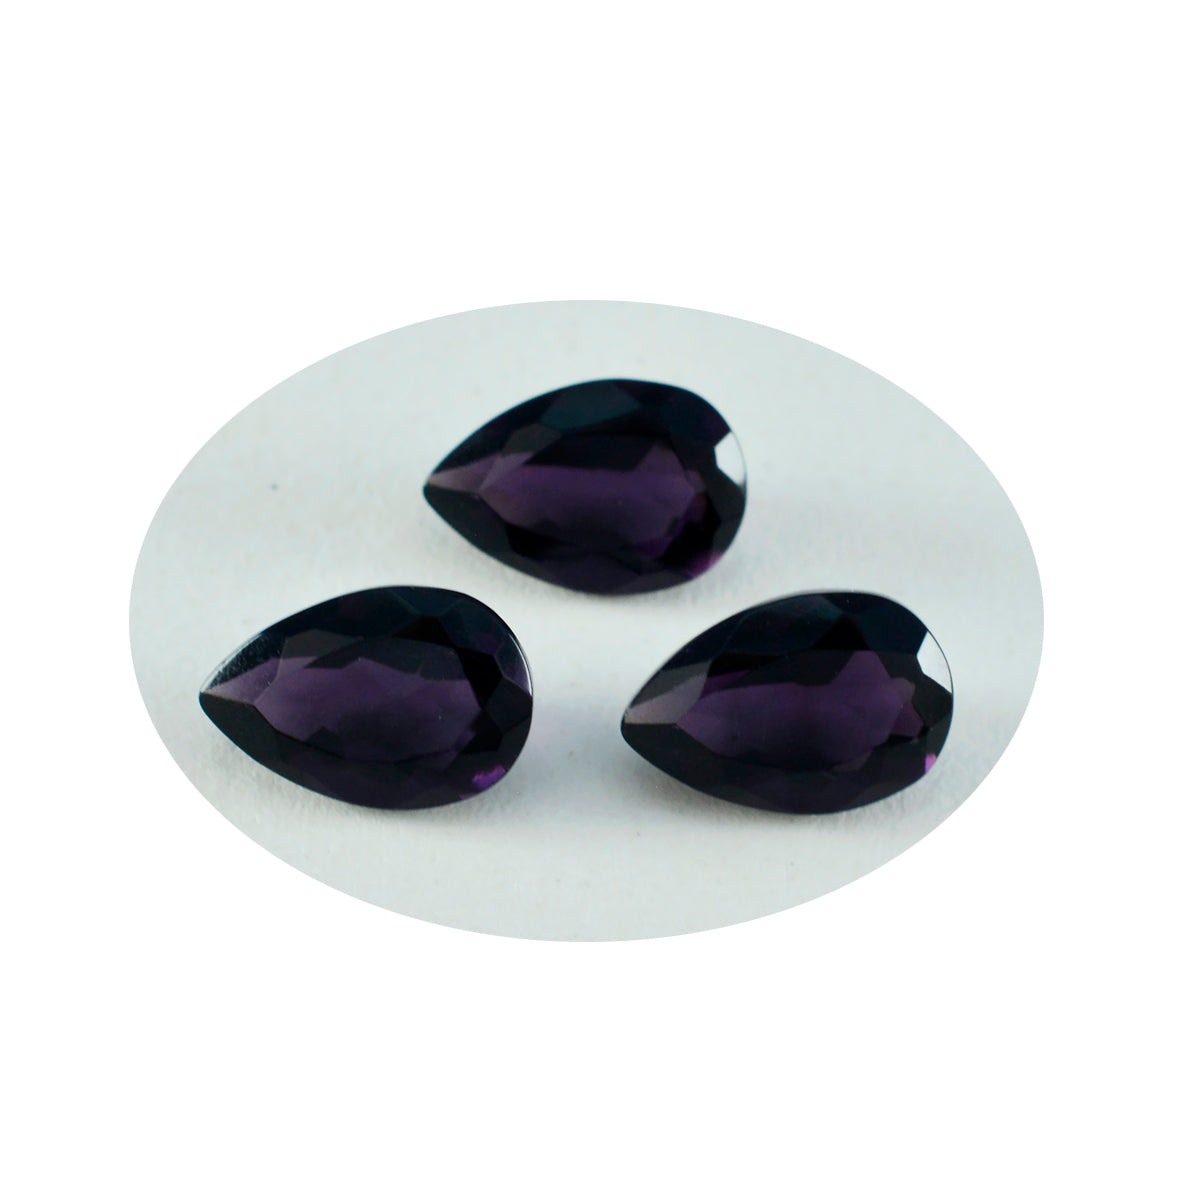 Riyogems 1PC Purple Amethyst CZ Faceted 7x10 mm Pear Shape AAA Quality Loose Gem